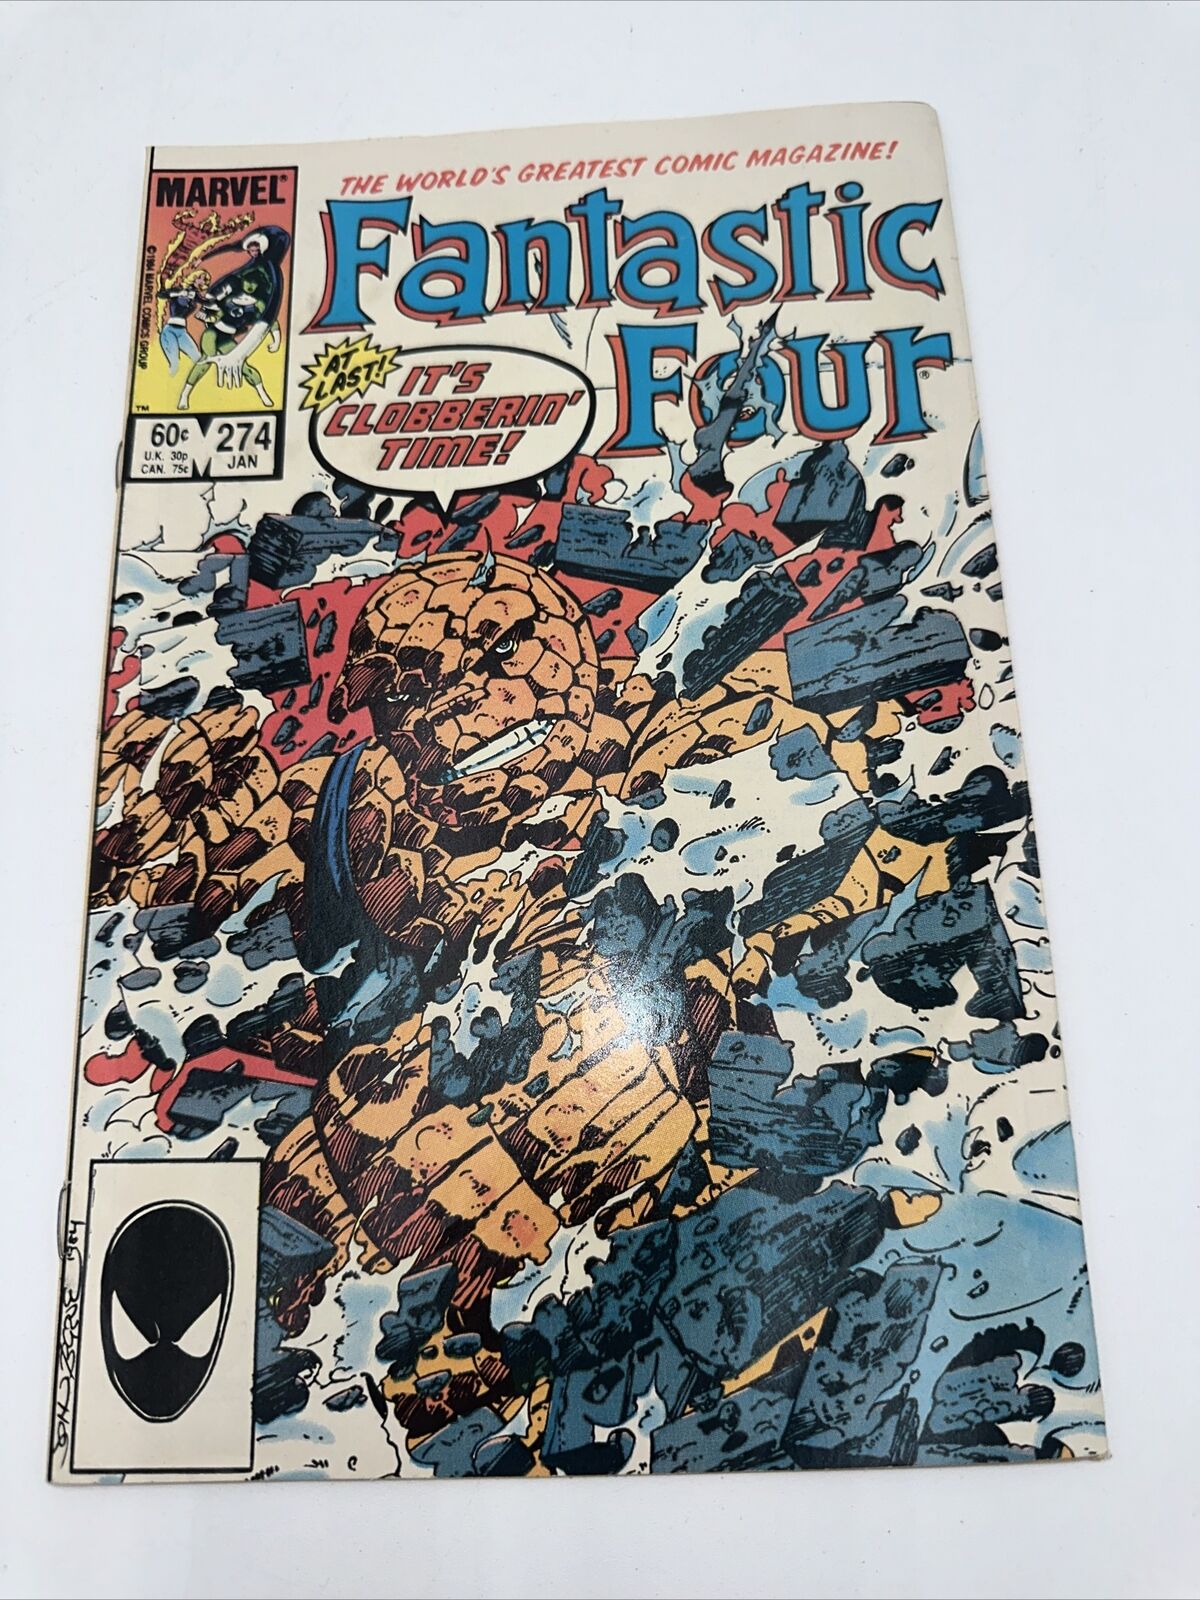 Fantastic Four #274 (Marvel Comics January 1985) Cover 1984 It's Clobberin' Time